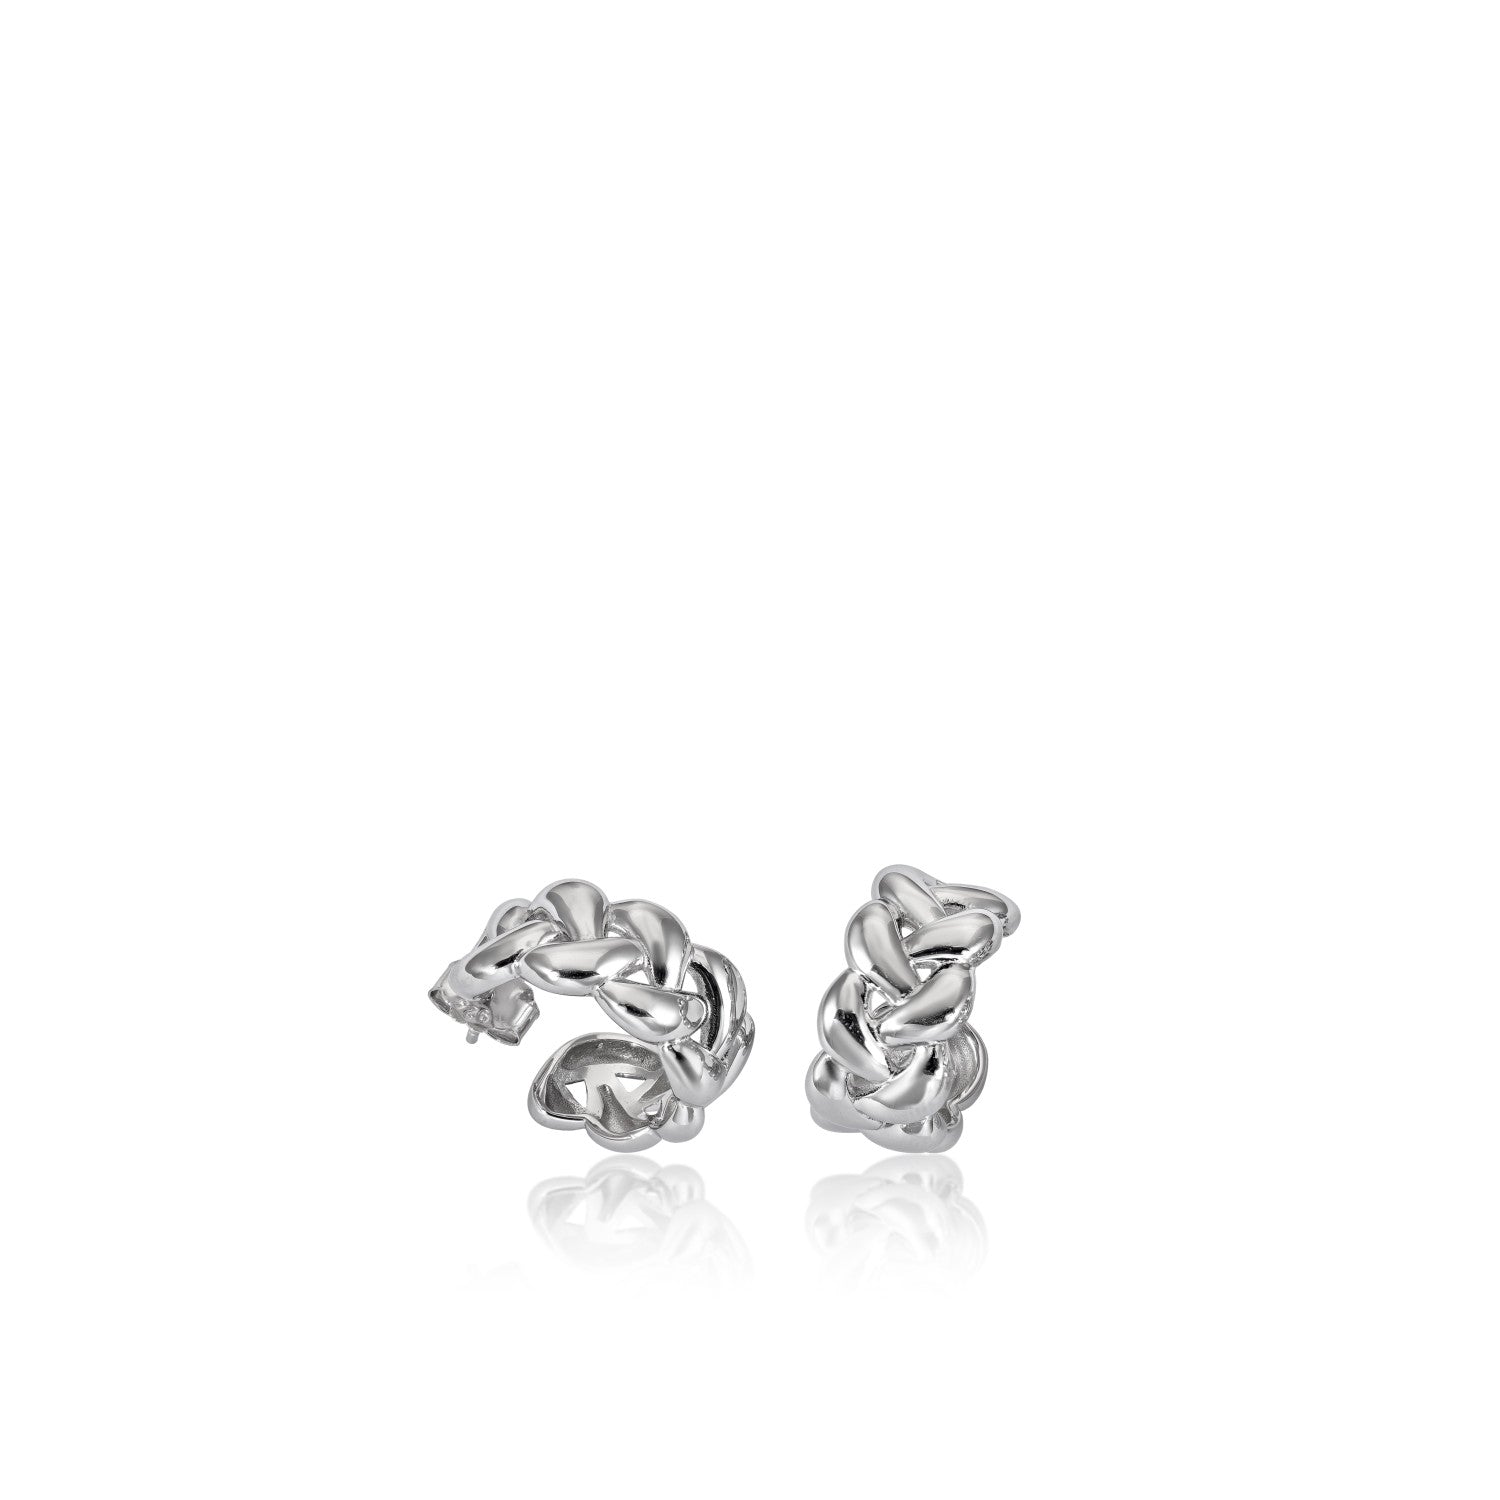 Plain silver hoop earrings with chain design